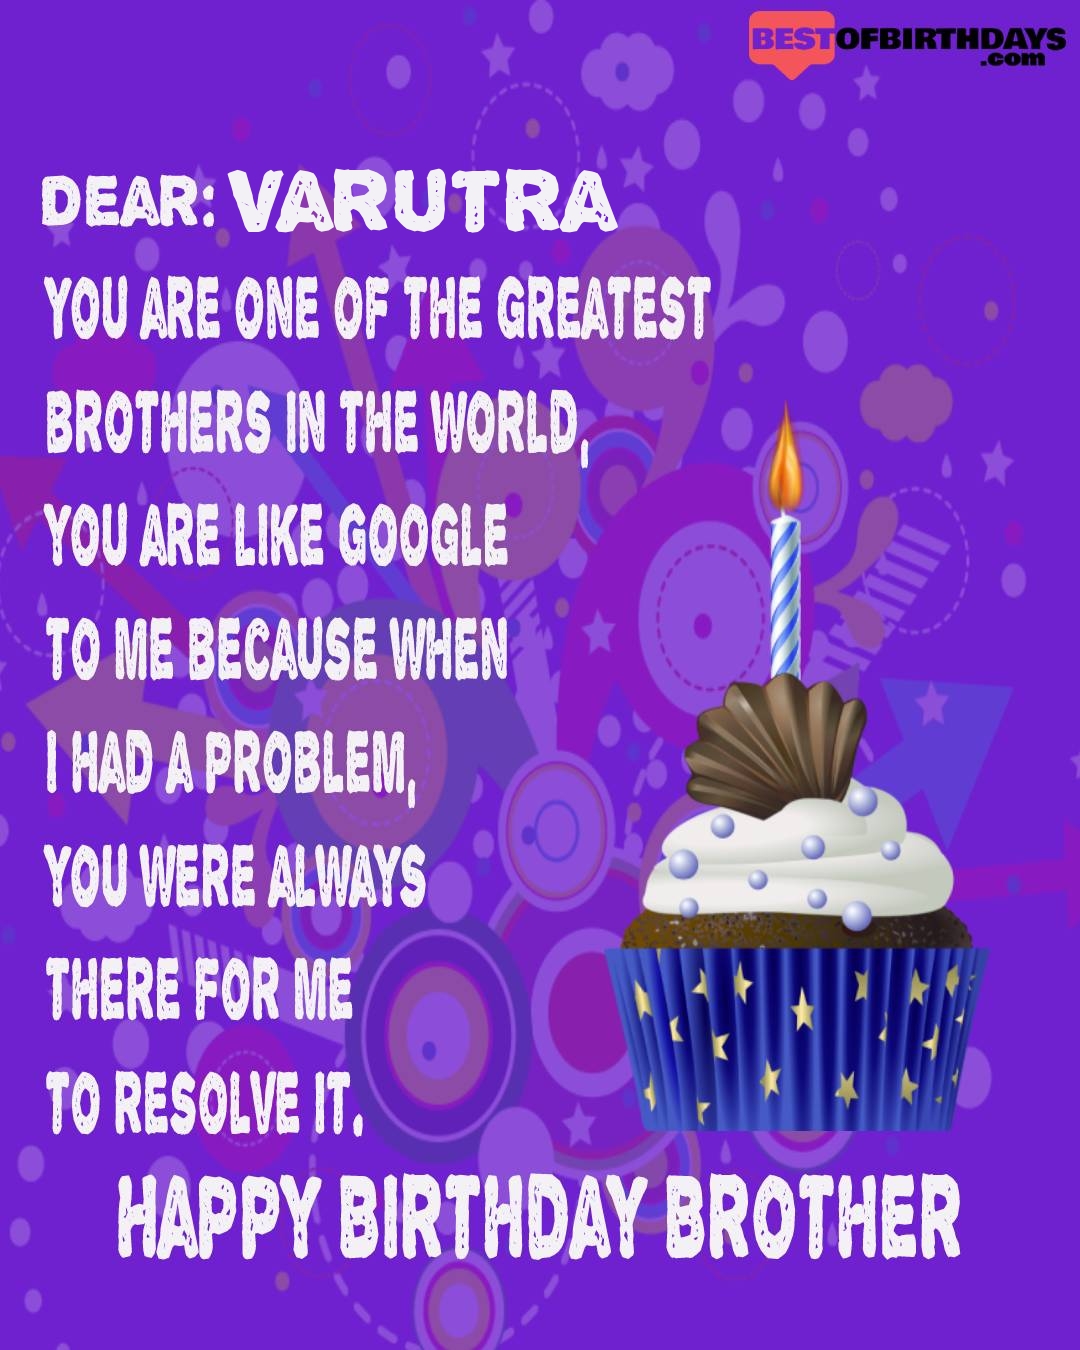 Happy birthday varutra bhai brother bro